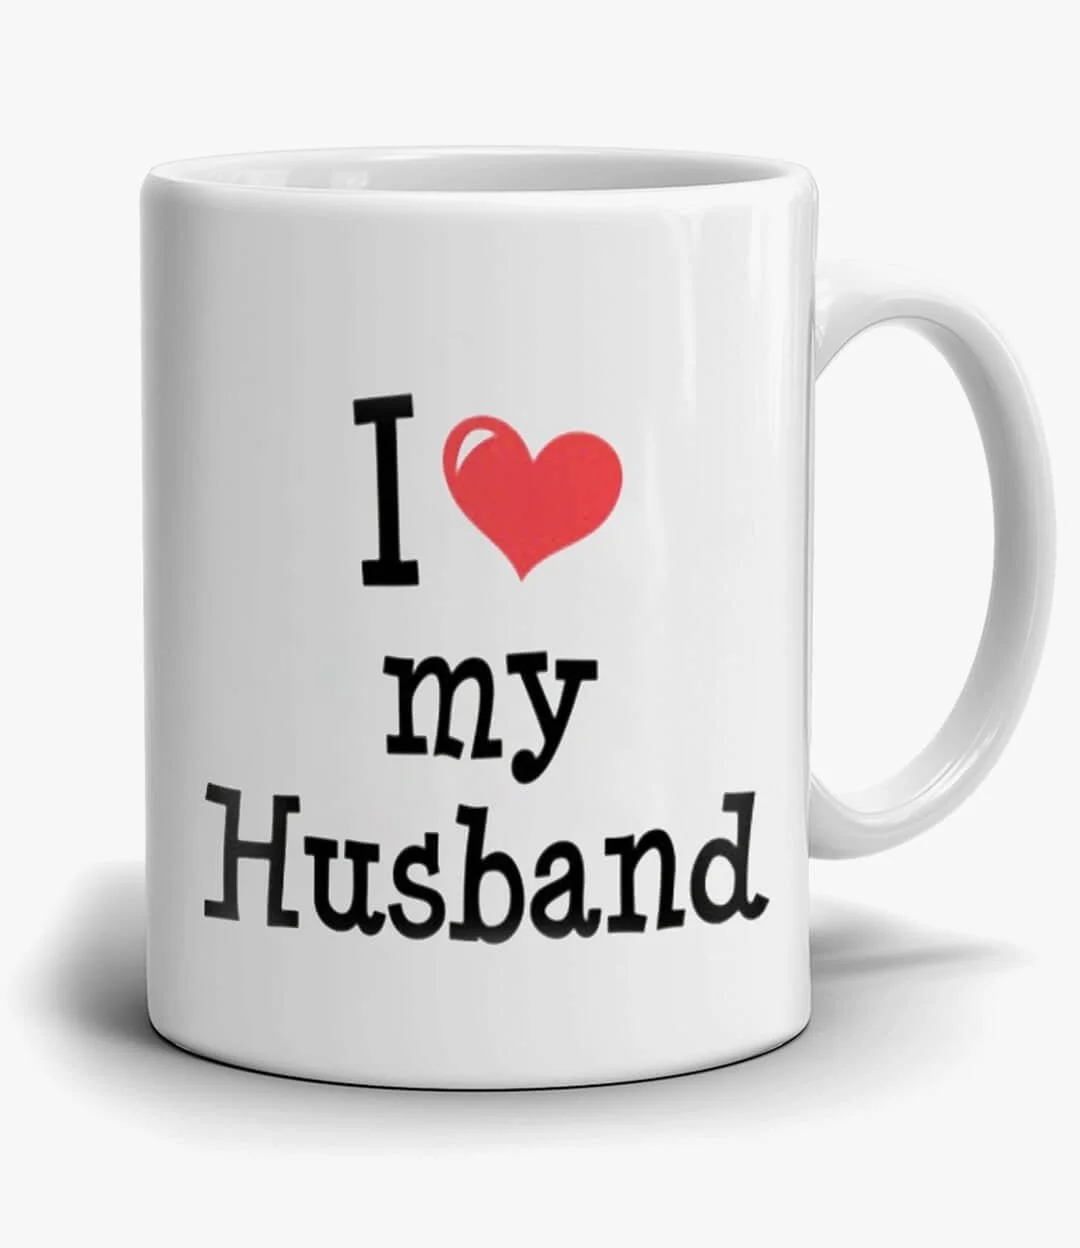 I Love my Husband Mug 